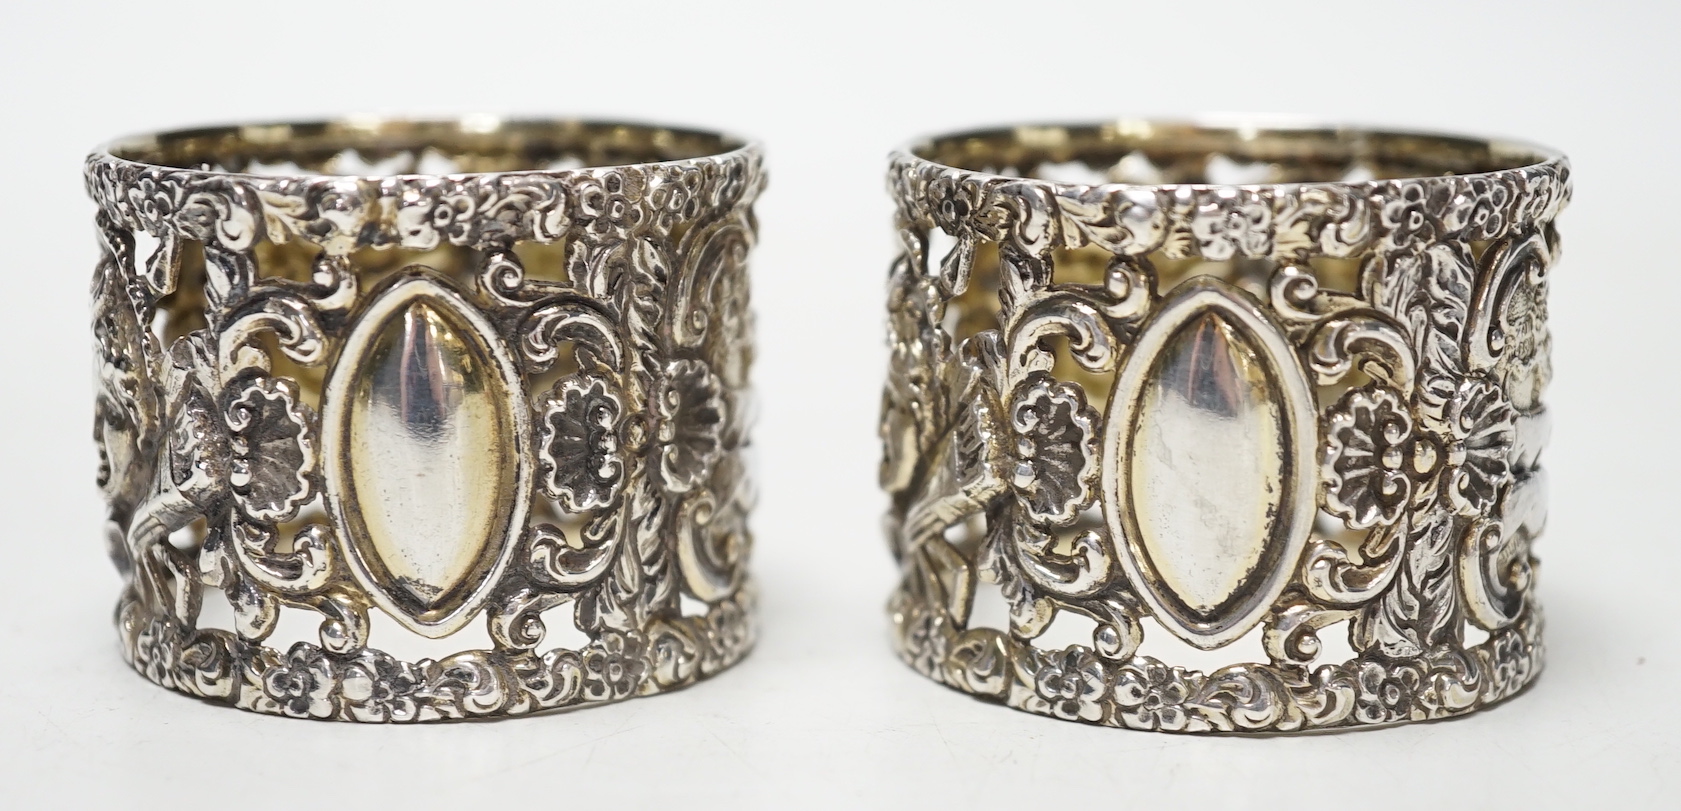 A pair of Edwardian silver serviette rings, pierced and embossed with deer hunting scenes, Wakely & Wheeler, London, 1906, 38mm.